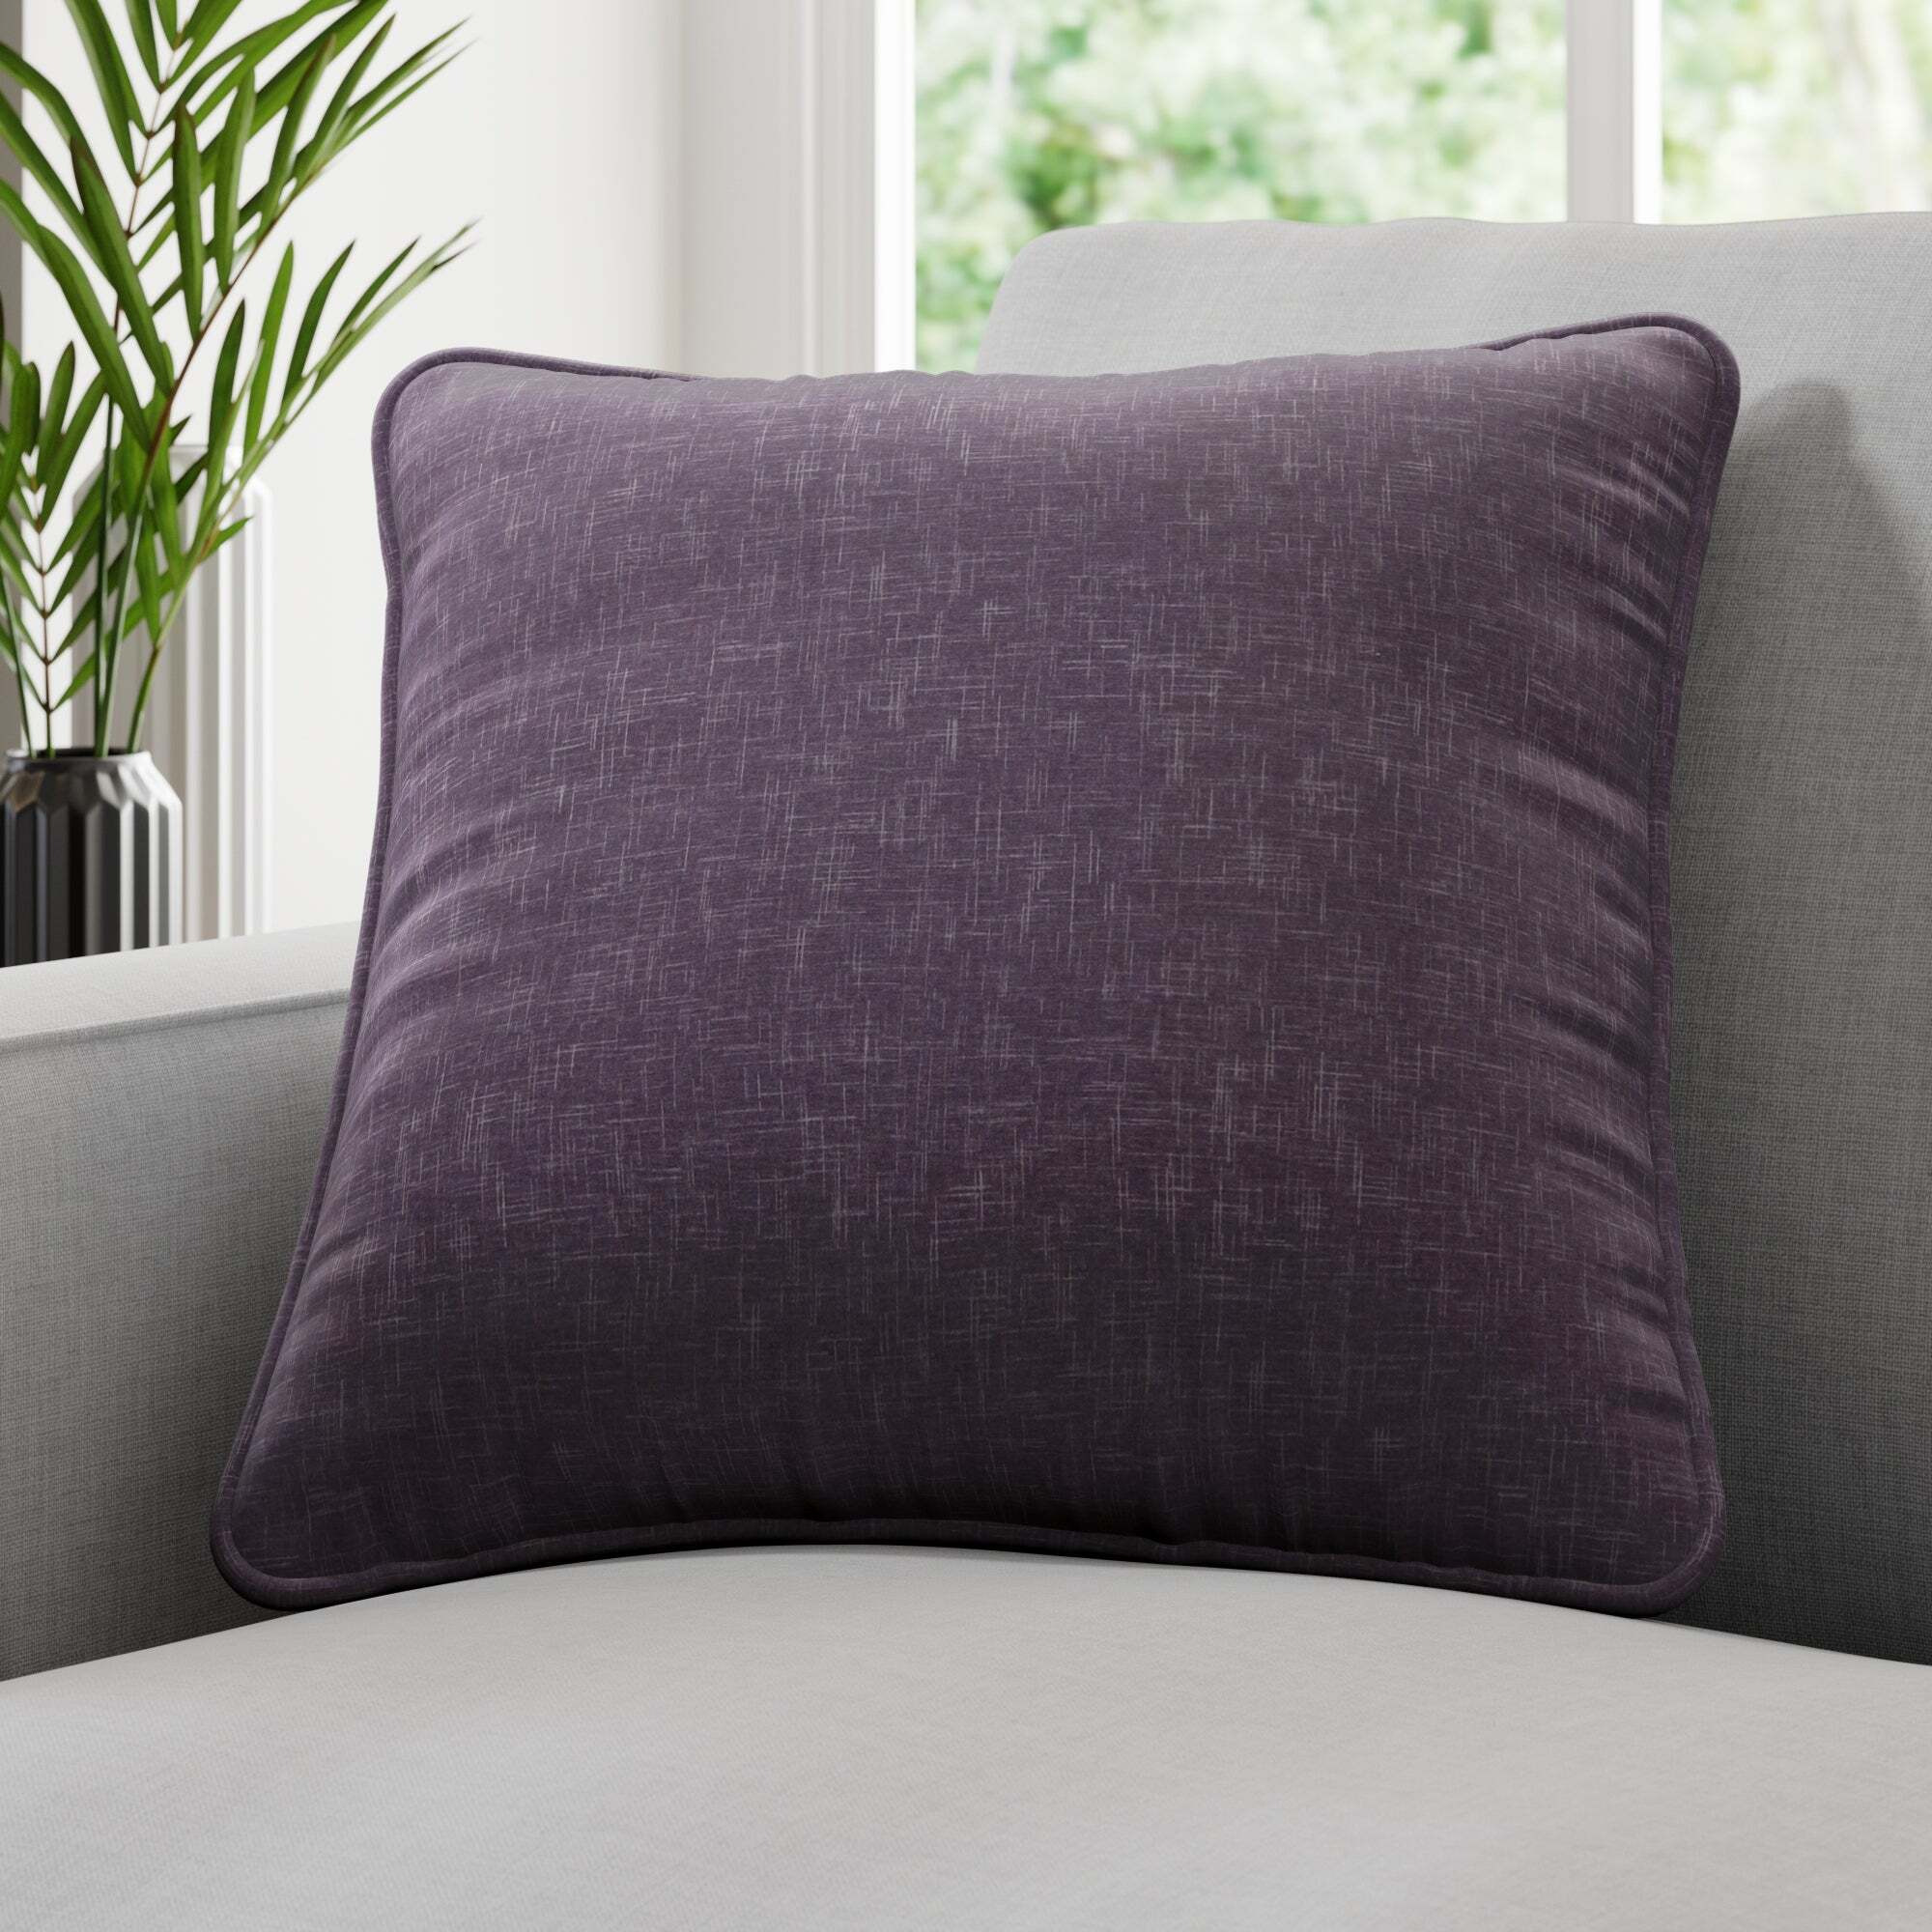 Tone Made to Order Fire Retardant Cushion Cover Purple